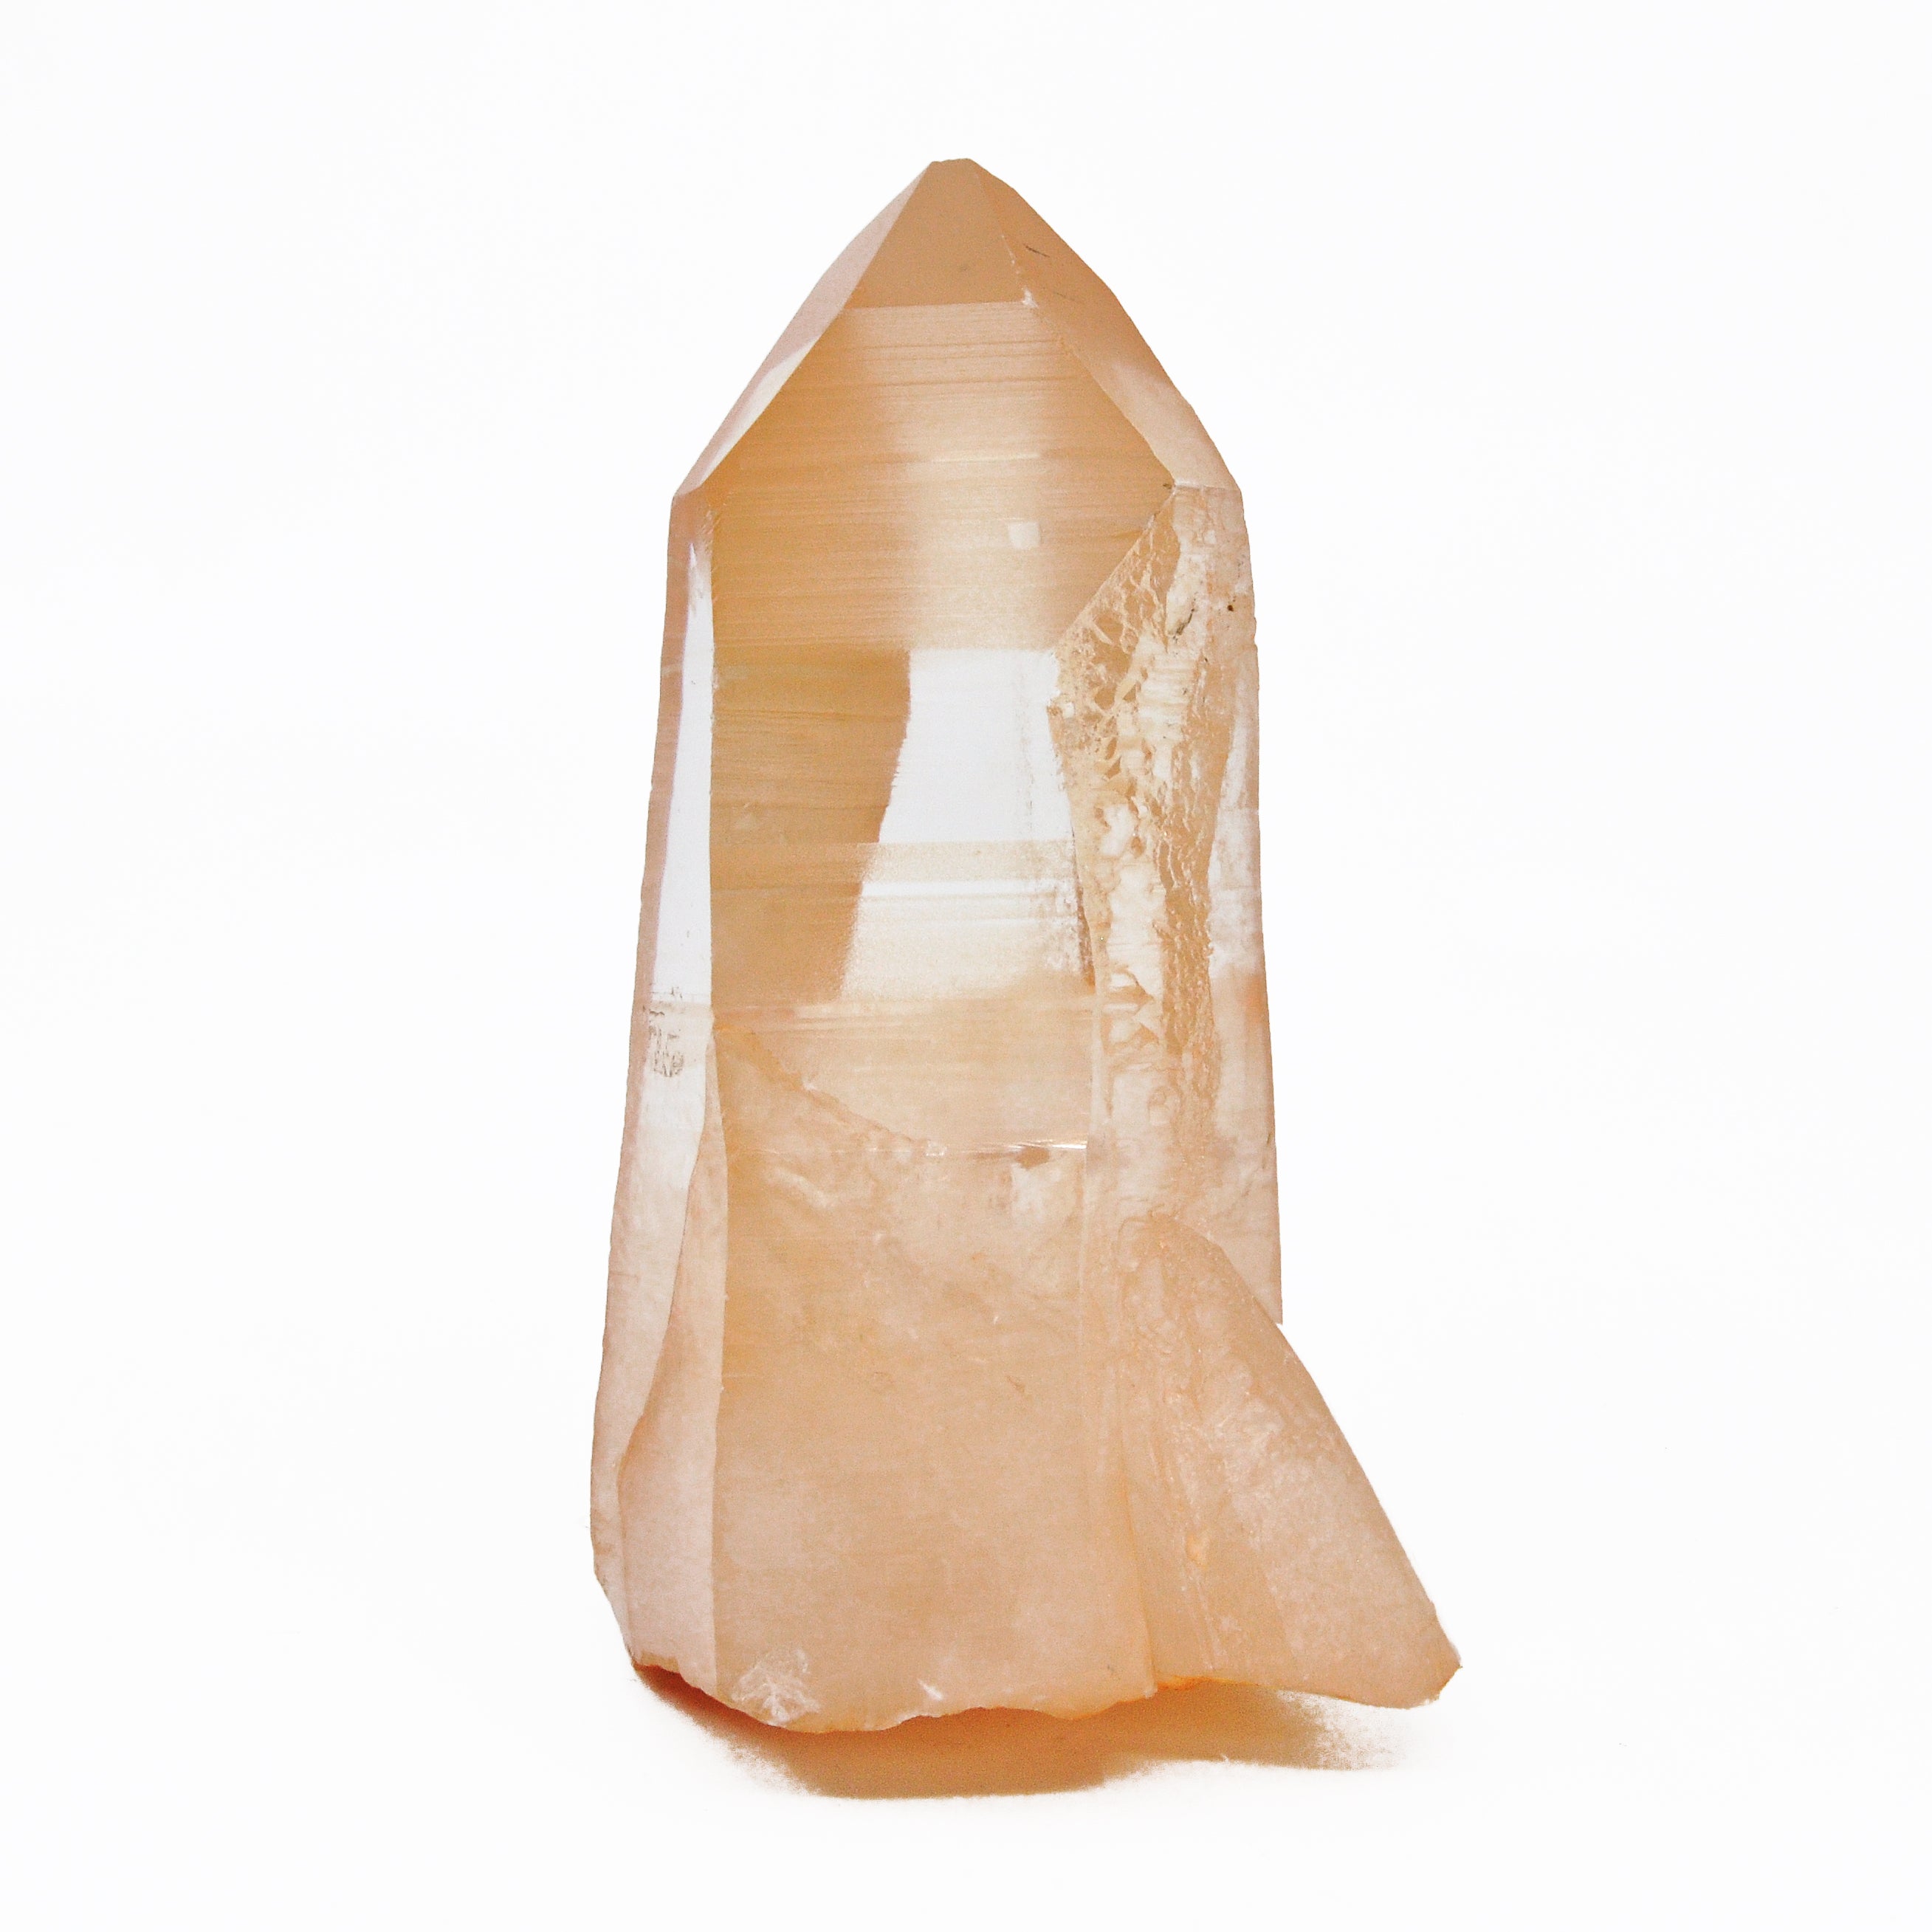 Tangerine Quartz with Iron 5.35 inch 1.43 lb Natural Crystal - Brazil - BBX-057 - Crystalarium